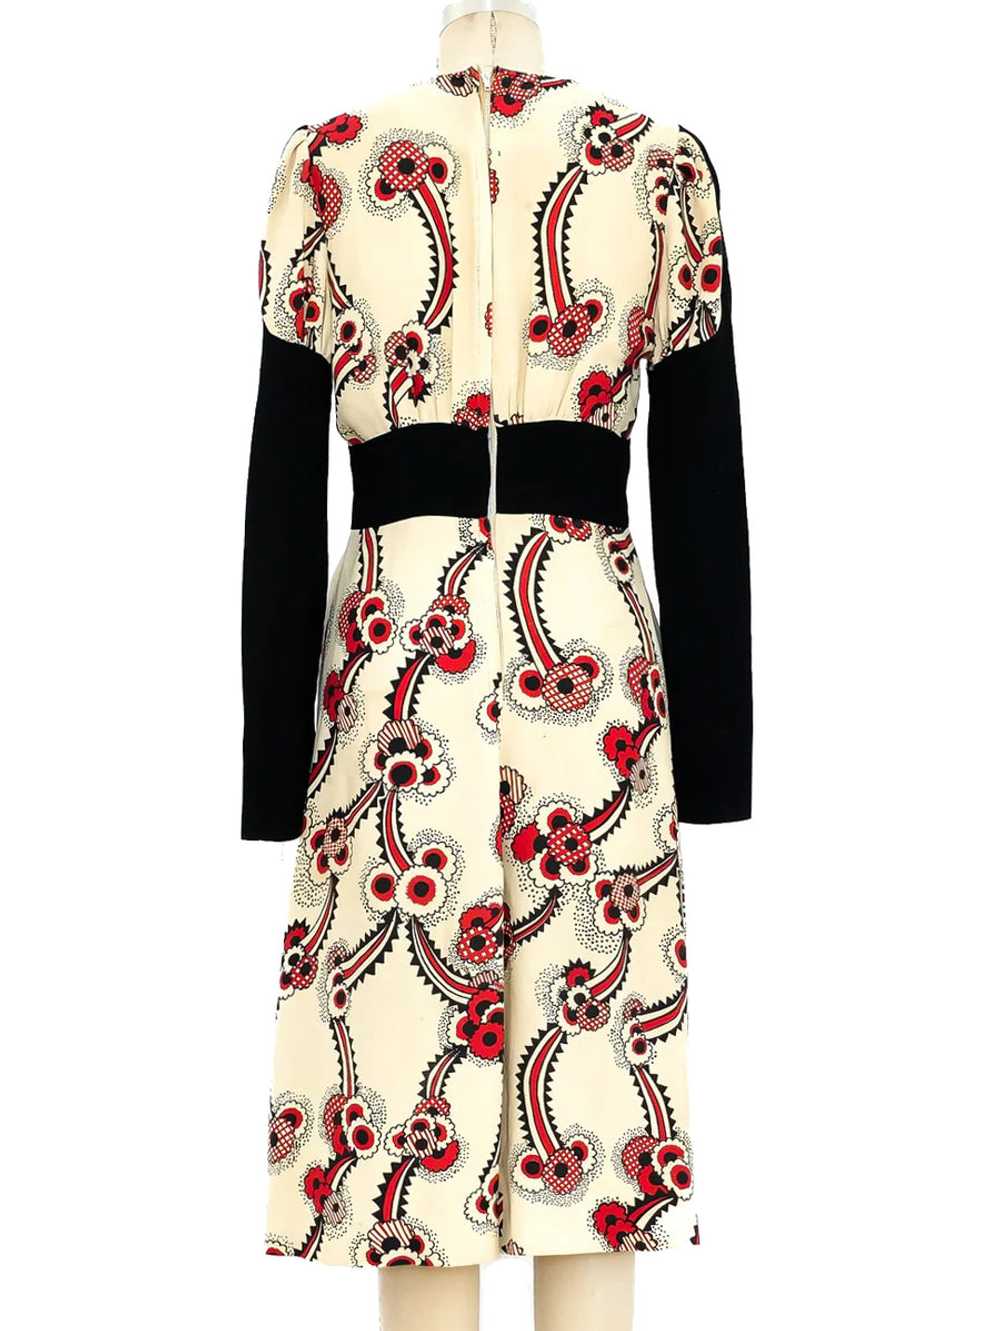 Ossie Clark Celia Birtwell Printed Crepe Dress - image 5